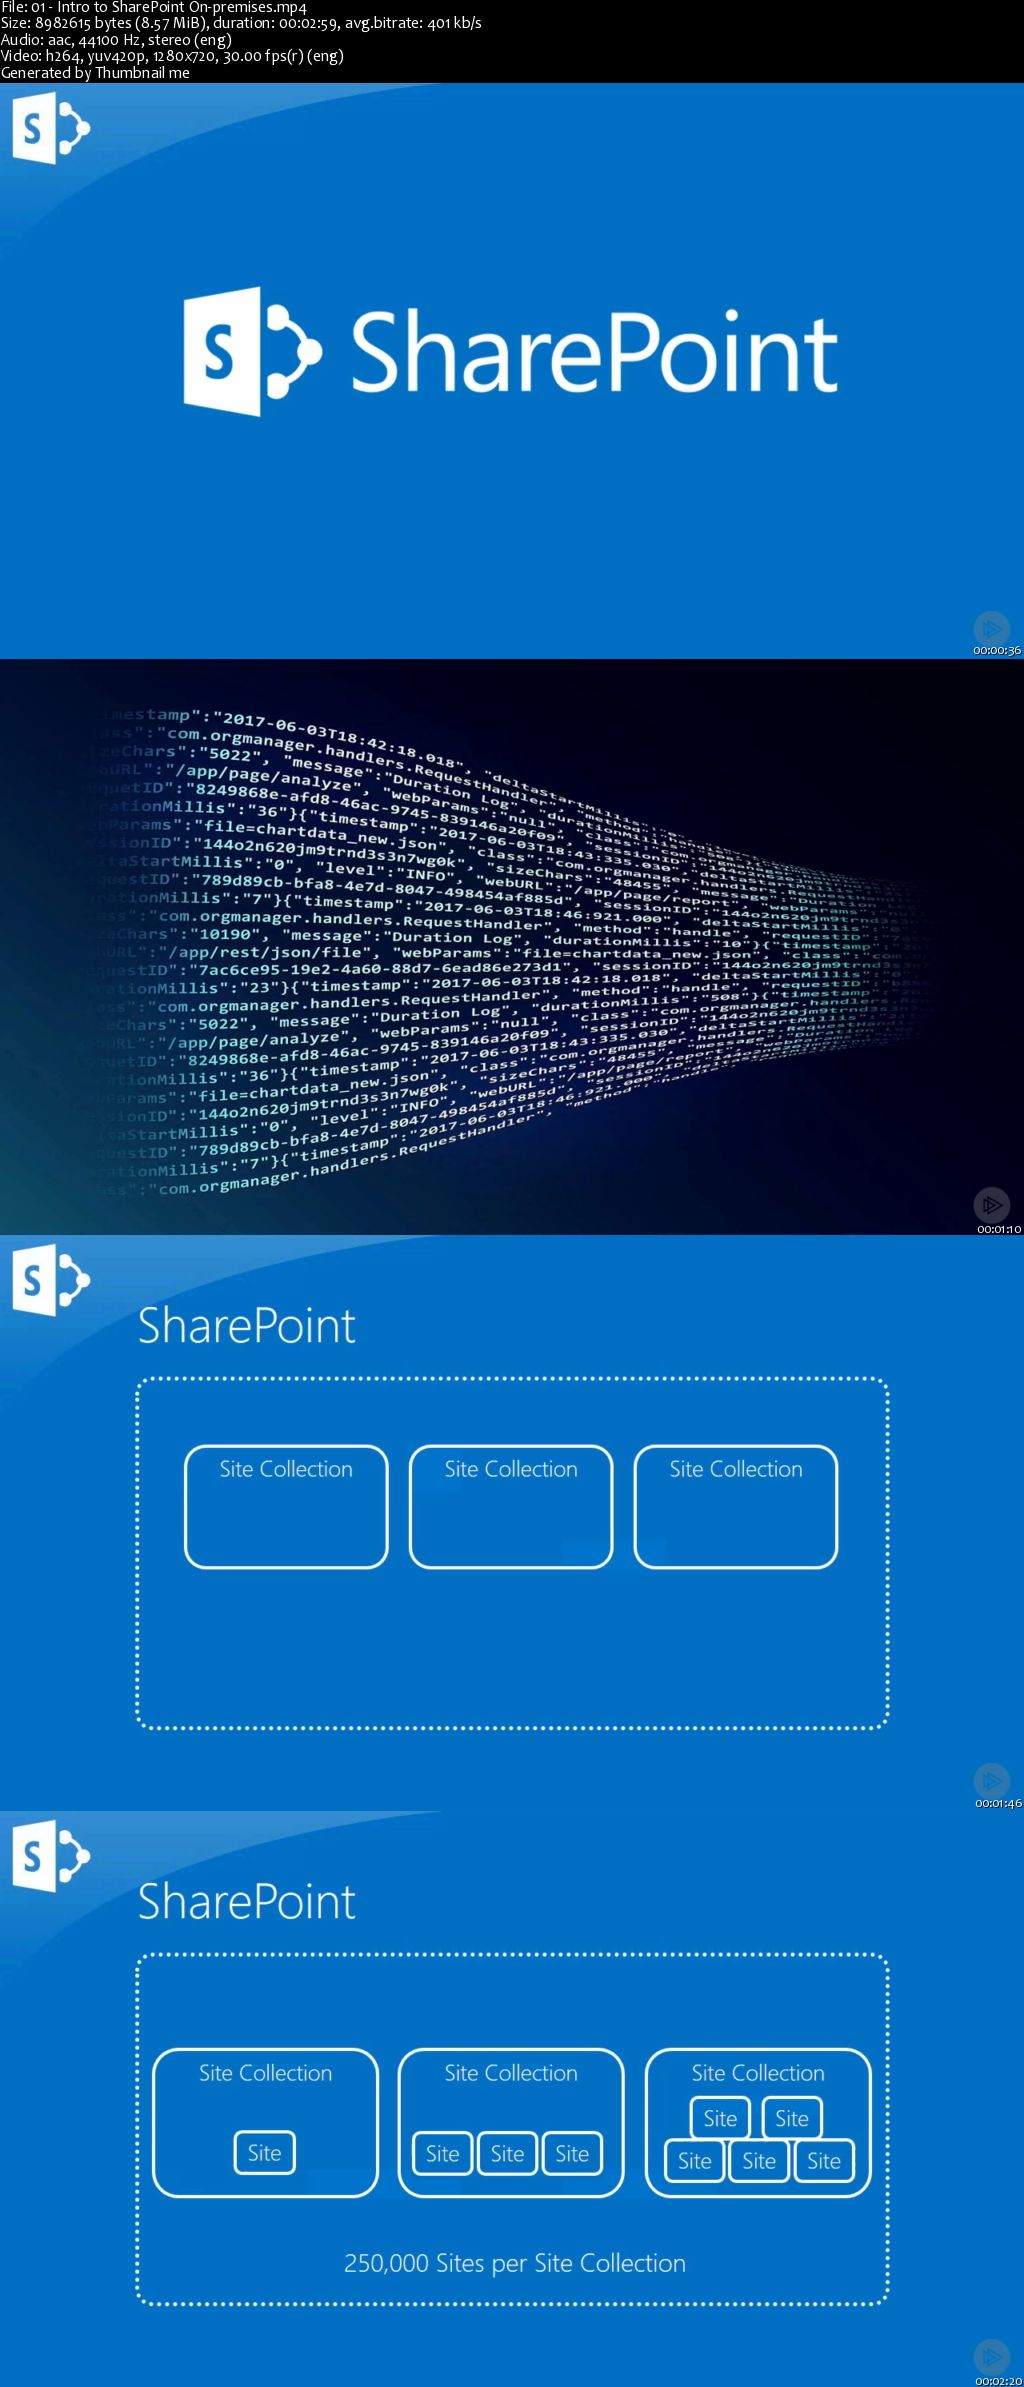 SharePoint at Work: SharePoint 2016 On-premises Essentials